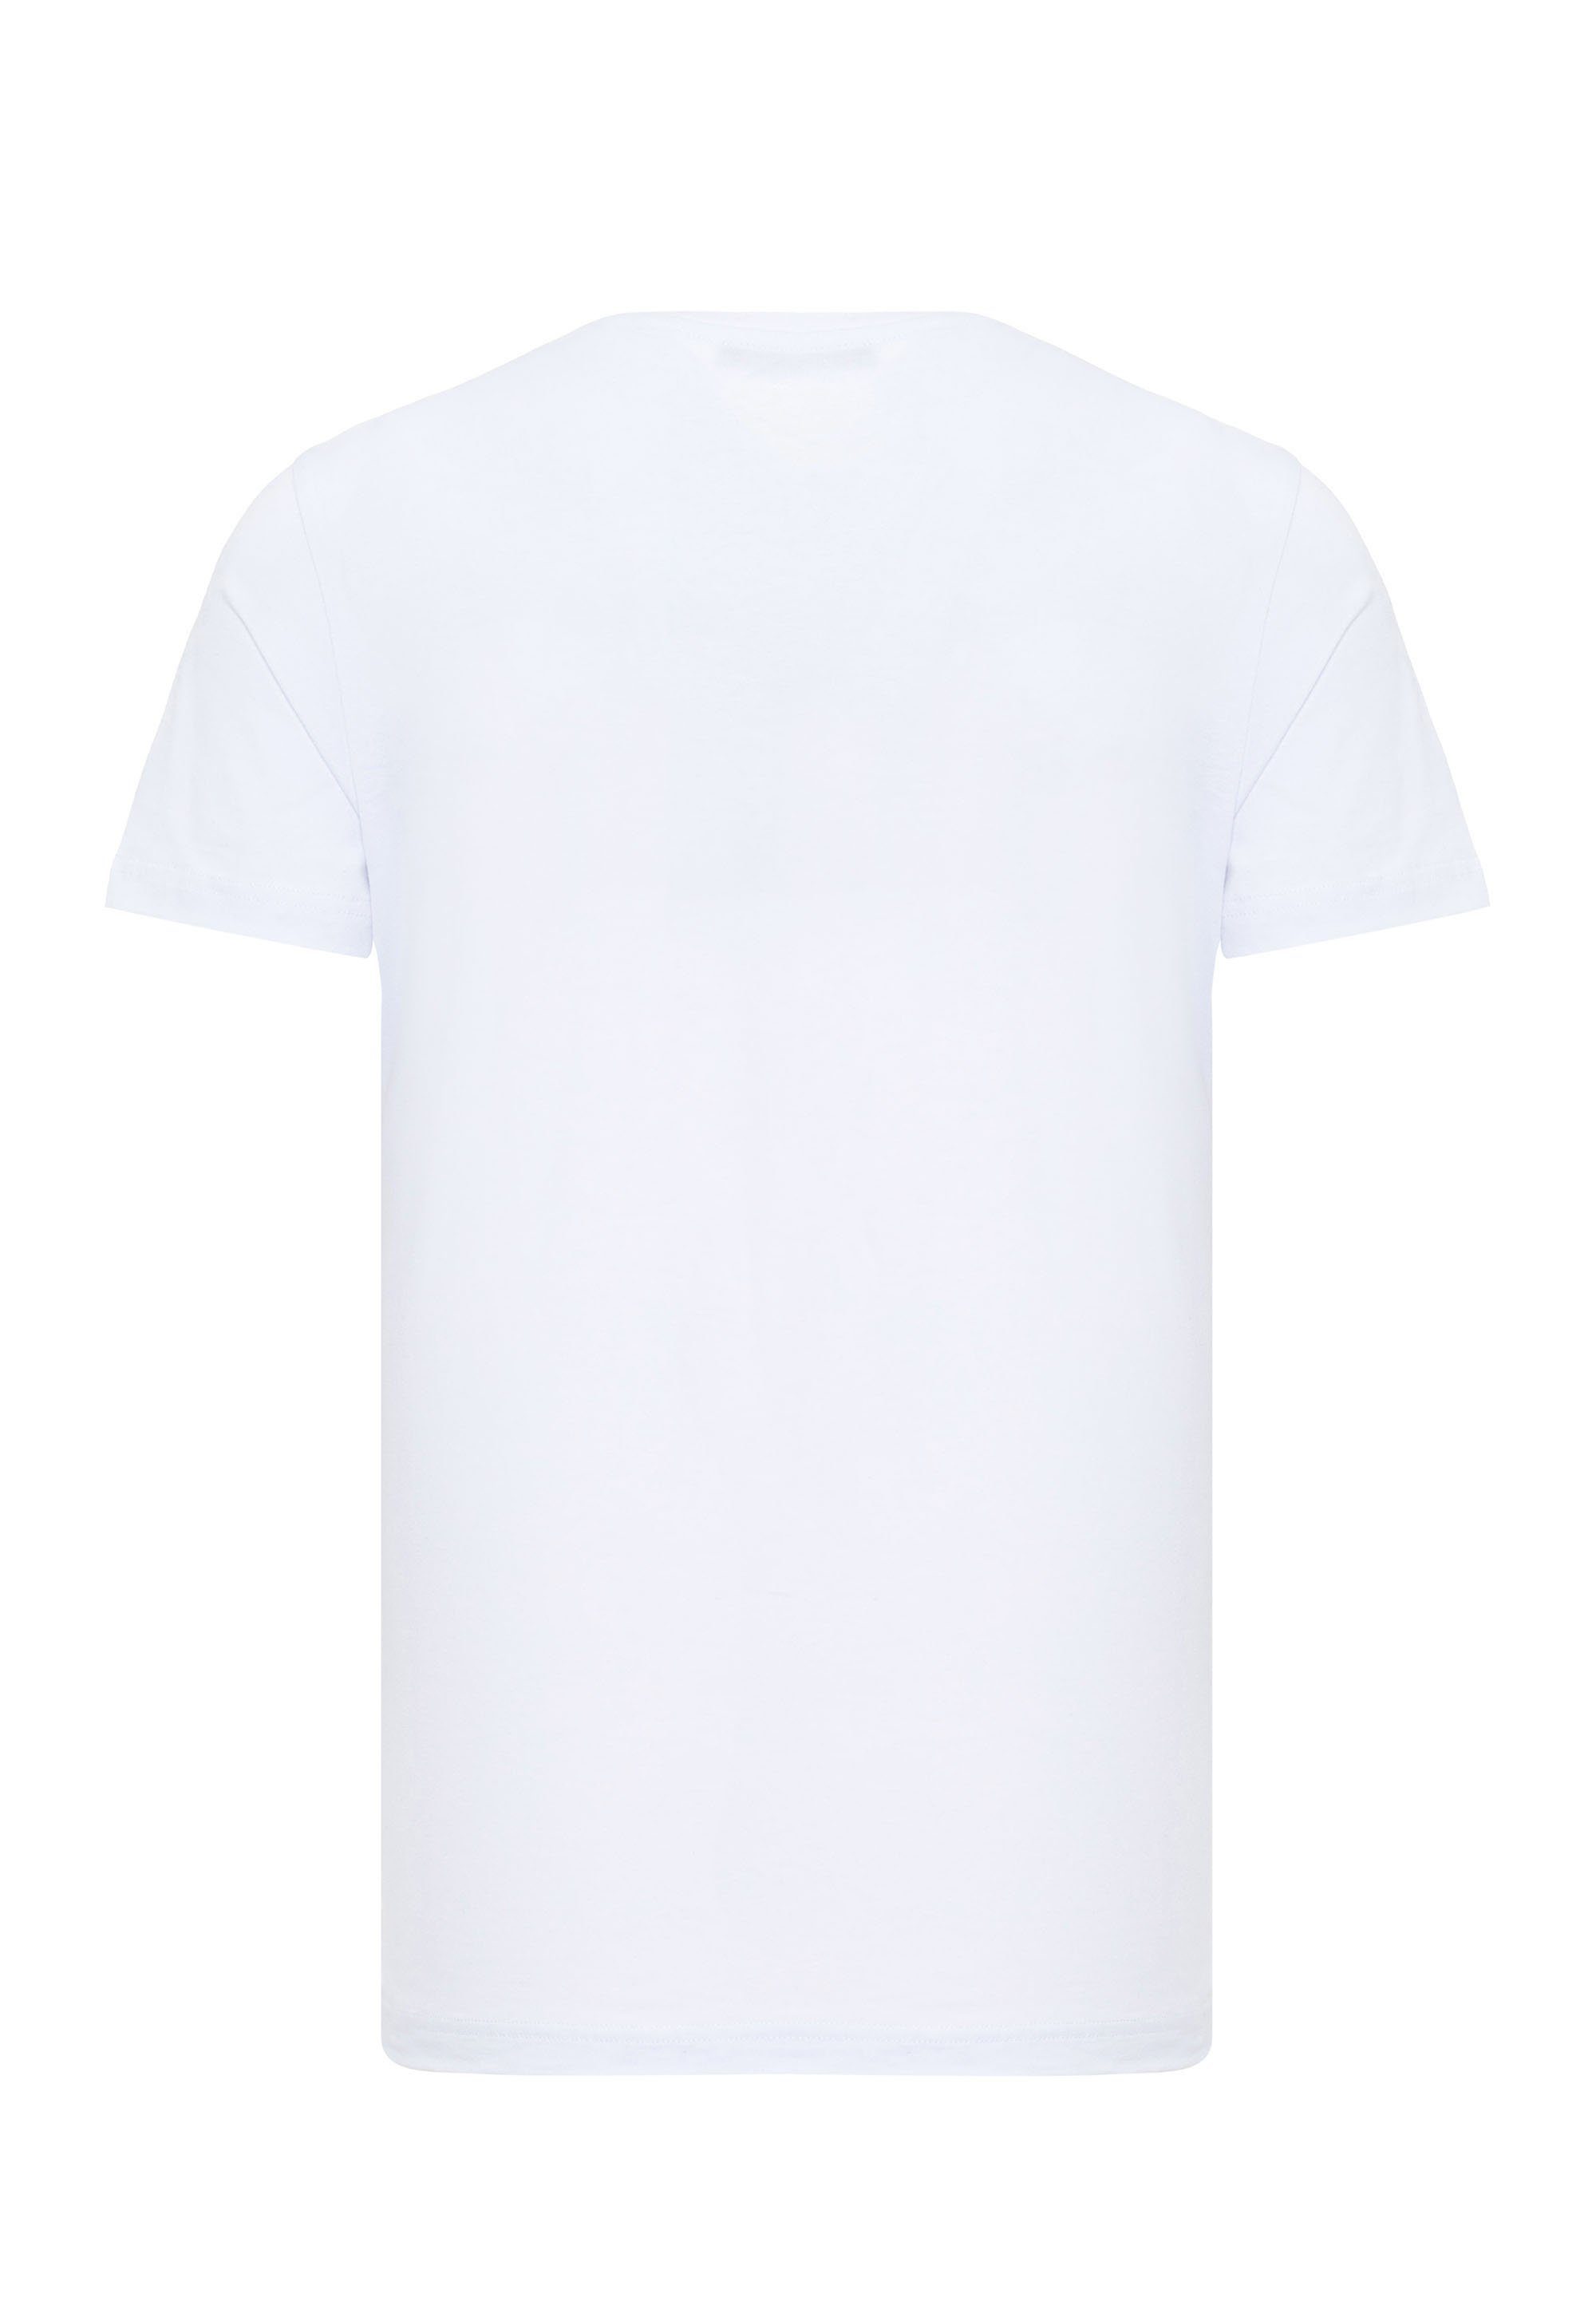 weiß mit T-Shirt & Cipo coolem Baxx Markenprint